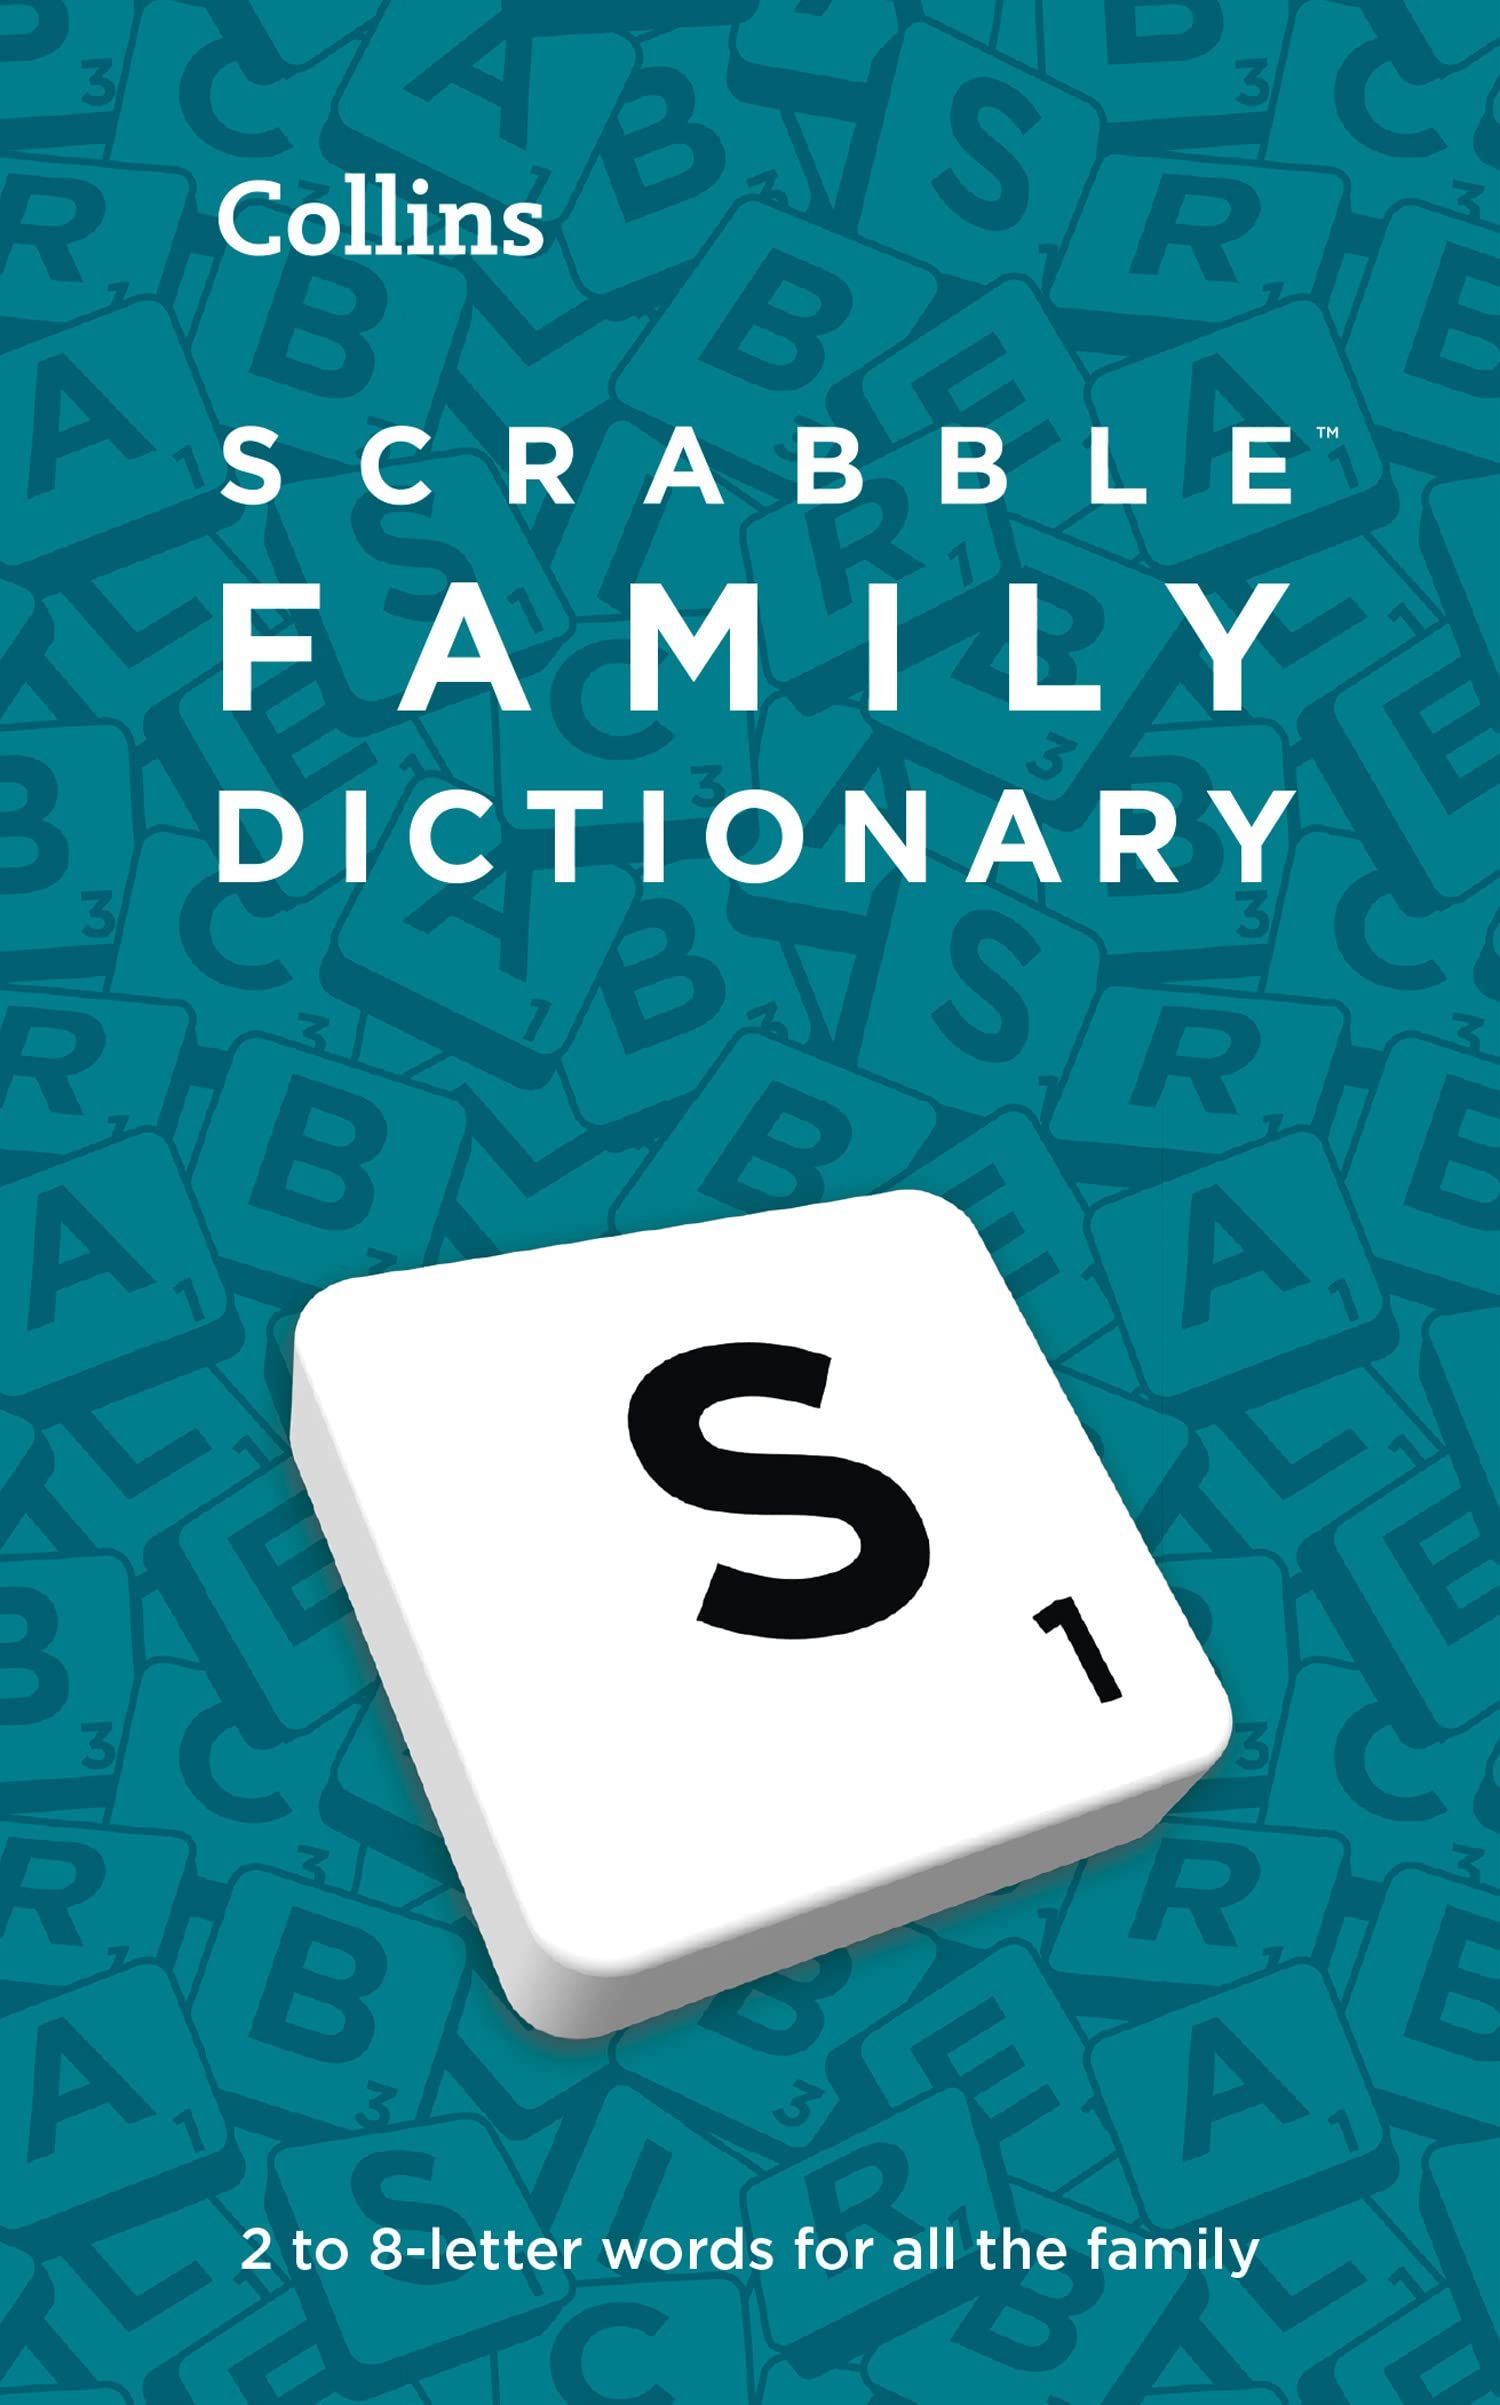 SCRABBLE (TM) Family Dictionary : The Family-Friendly Scrabble (TM) Dictionary